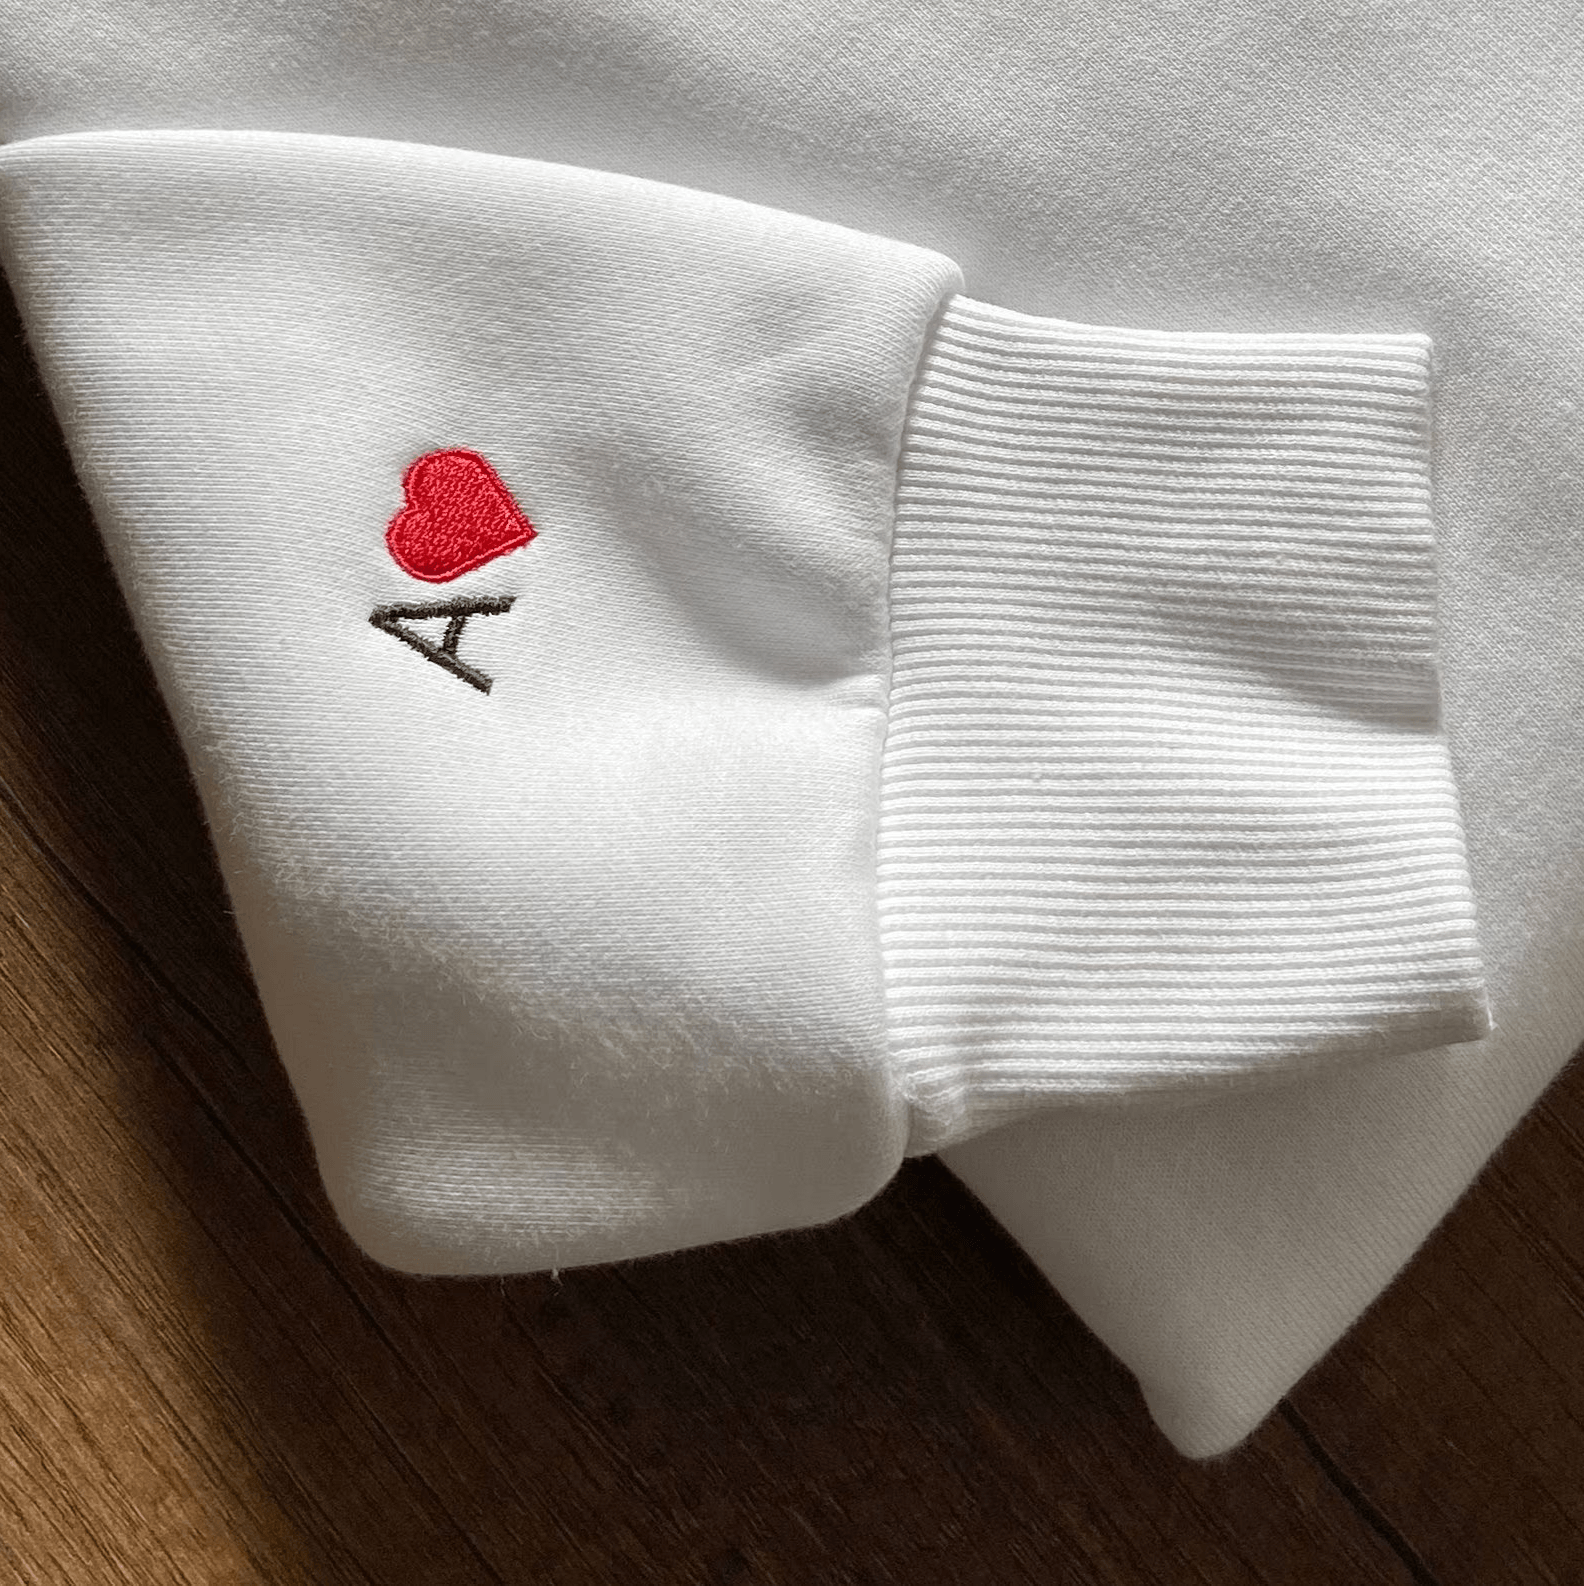 Custom Heart Knives Embroidered Matching Set Couple Sweatshirt Hoodies